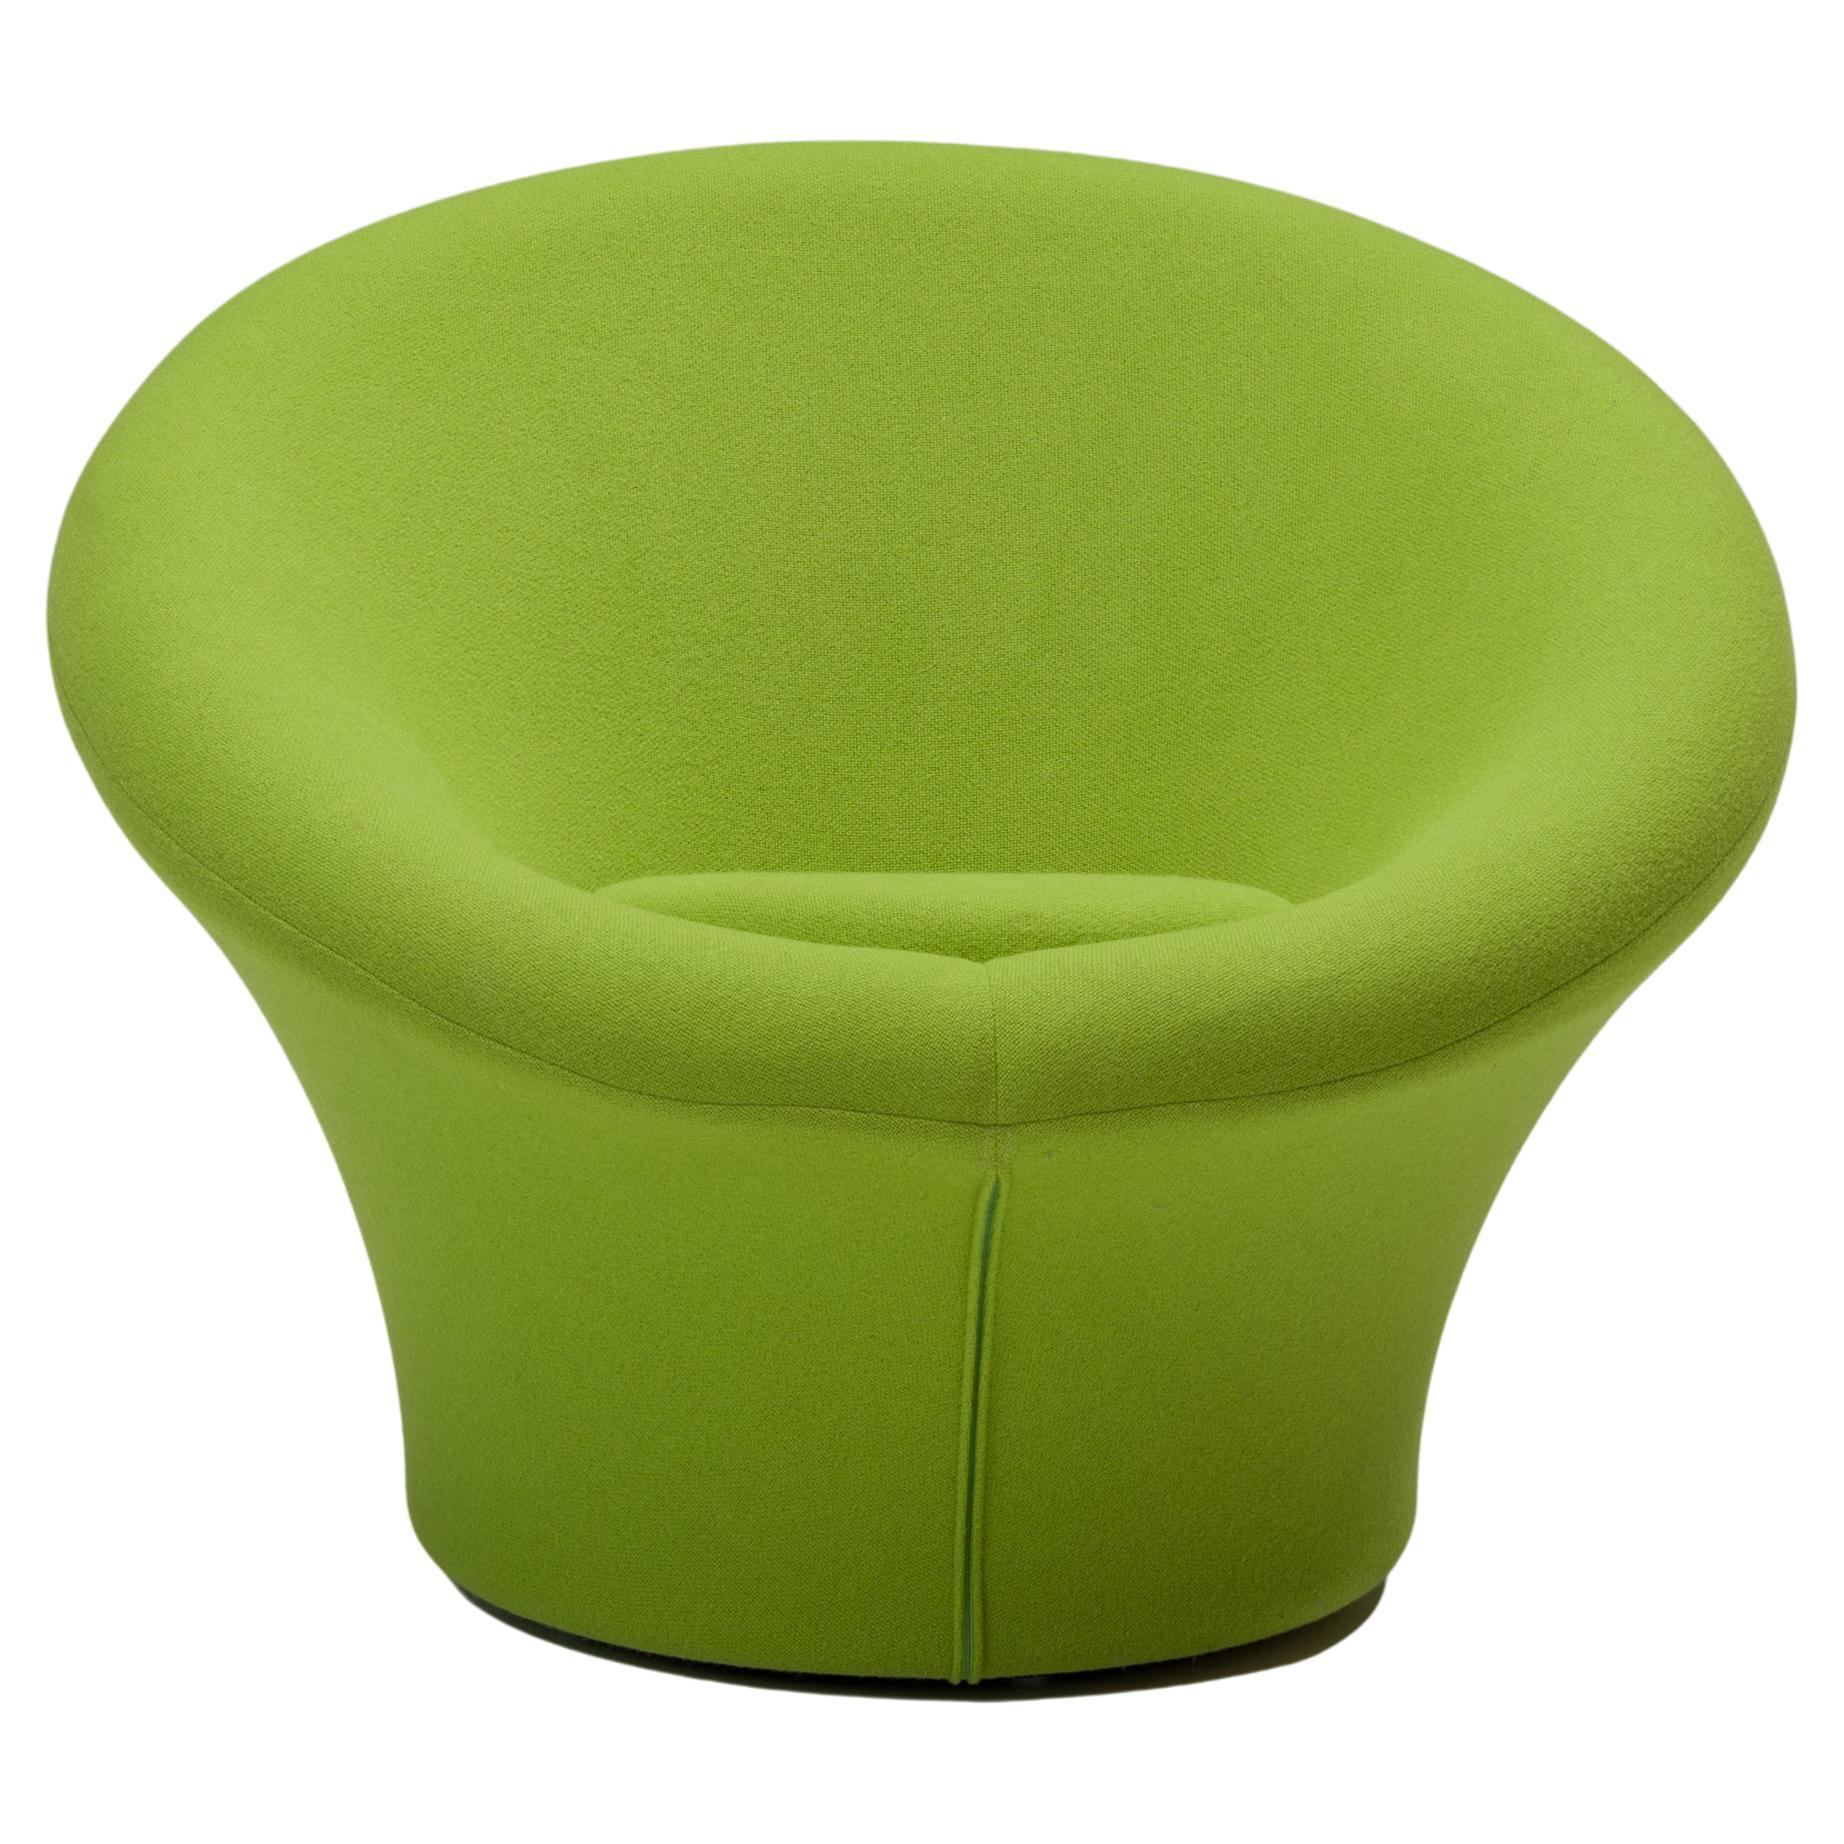 Pierre Paulin pour Artifort Green F560 Mushroom Chair